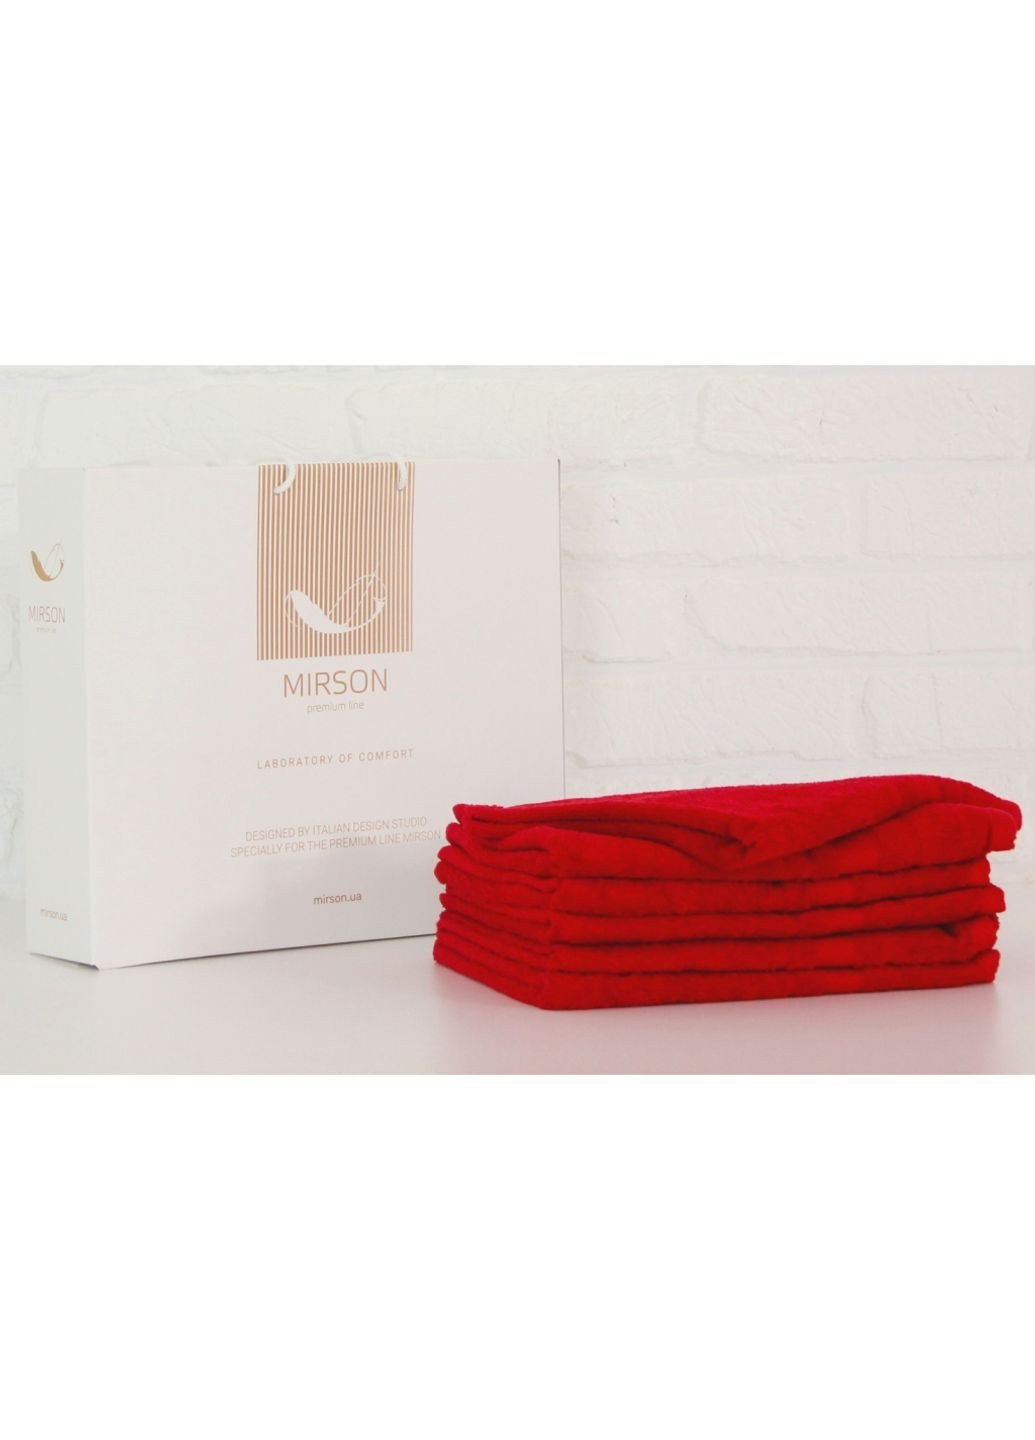 No Brand полотенце mirson набор банный №5070 elite softness bordo 70х140 6 шт (2200003524109) красный производство - Украина